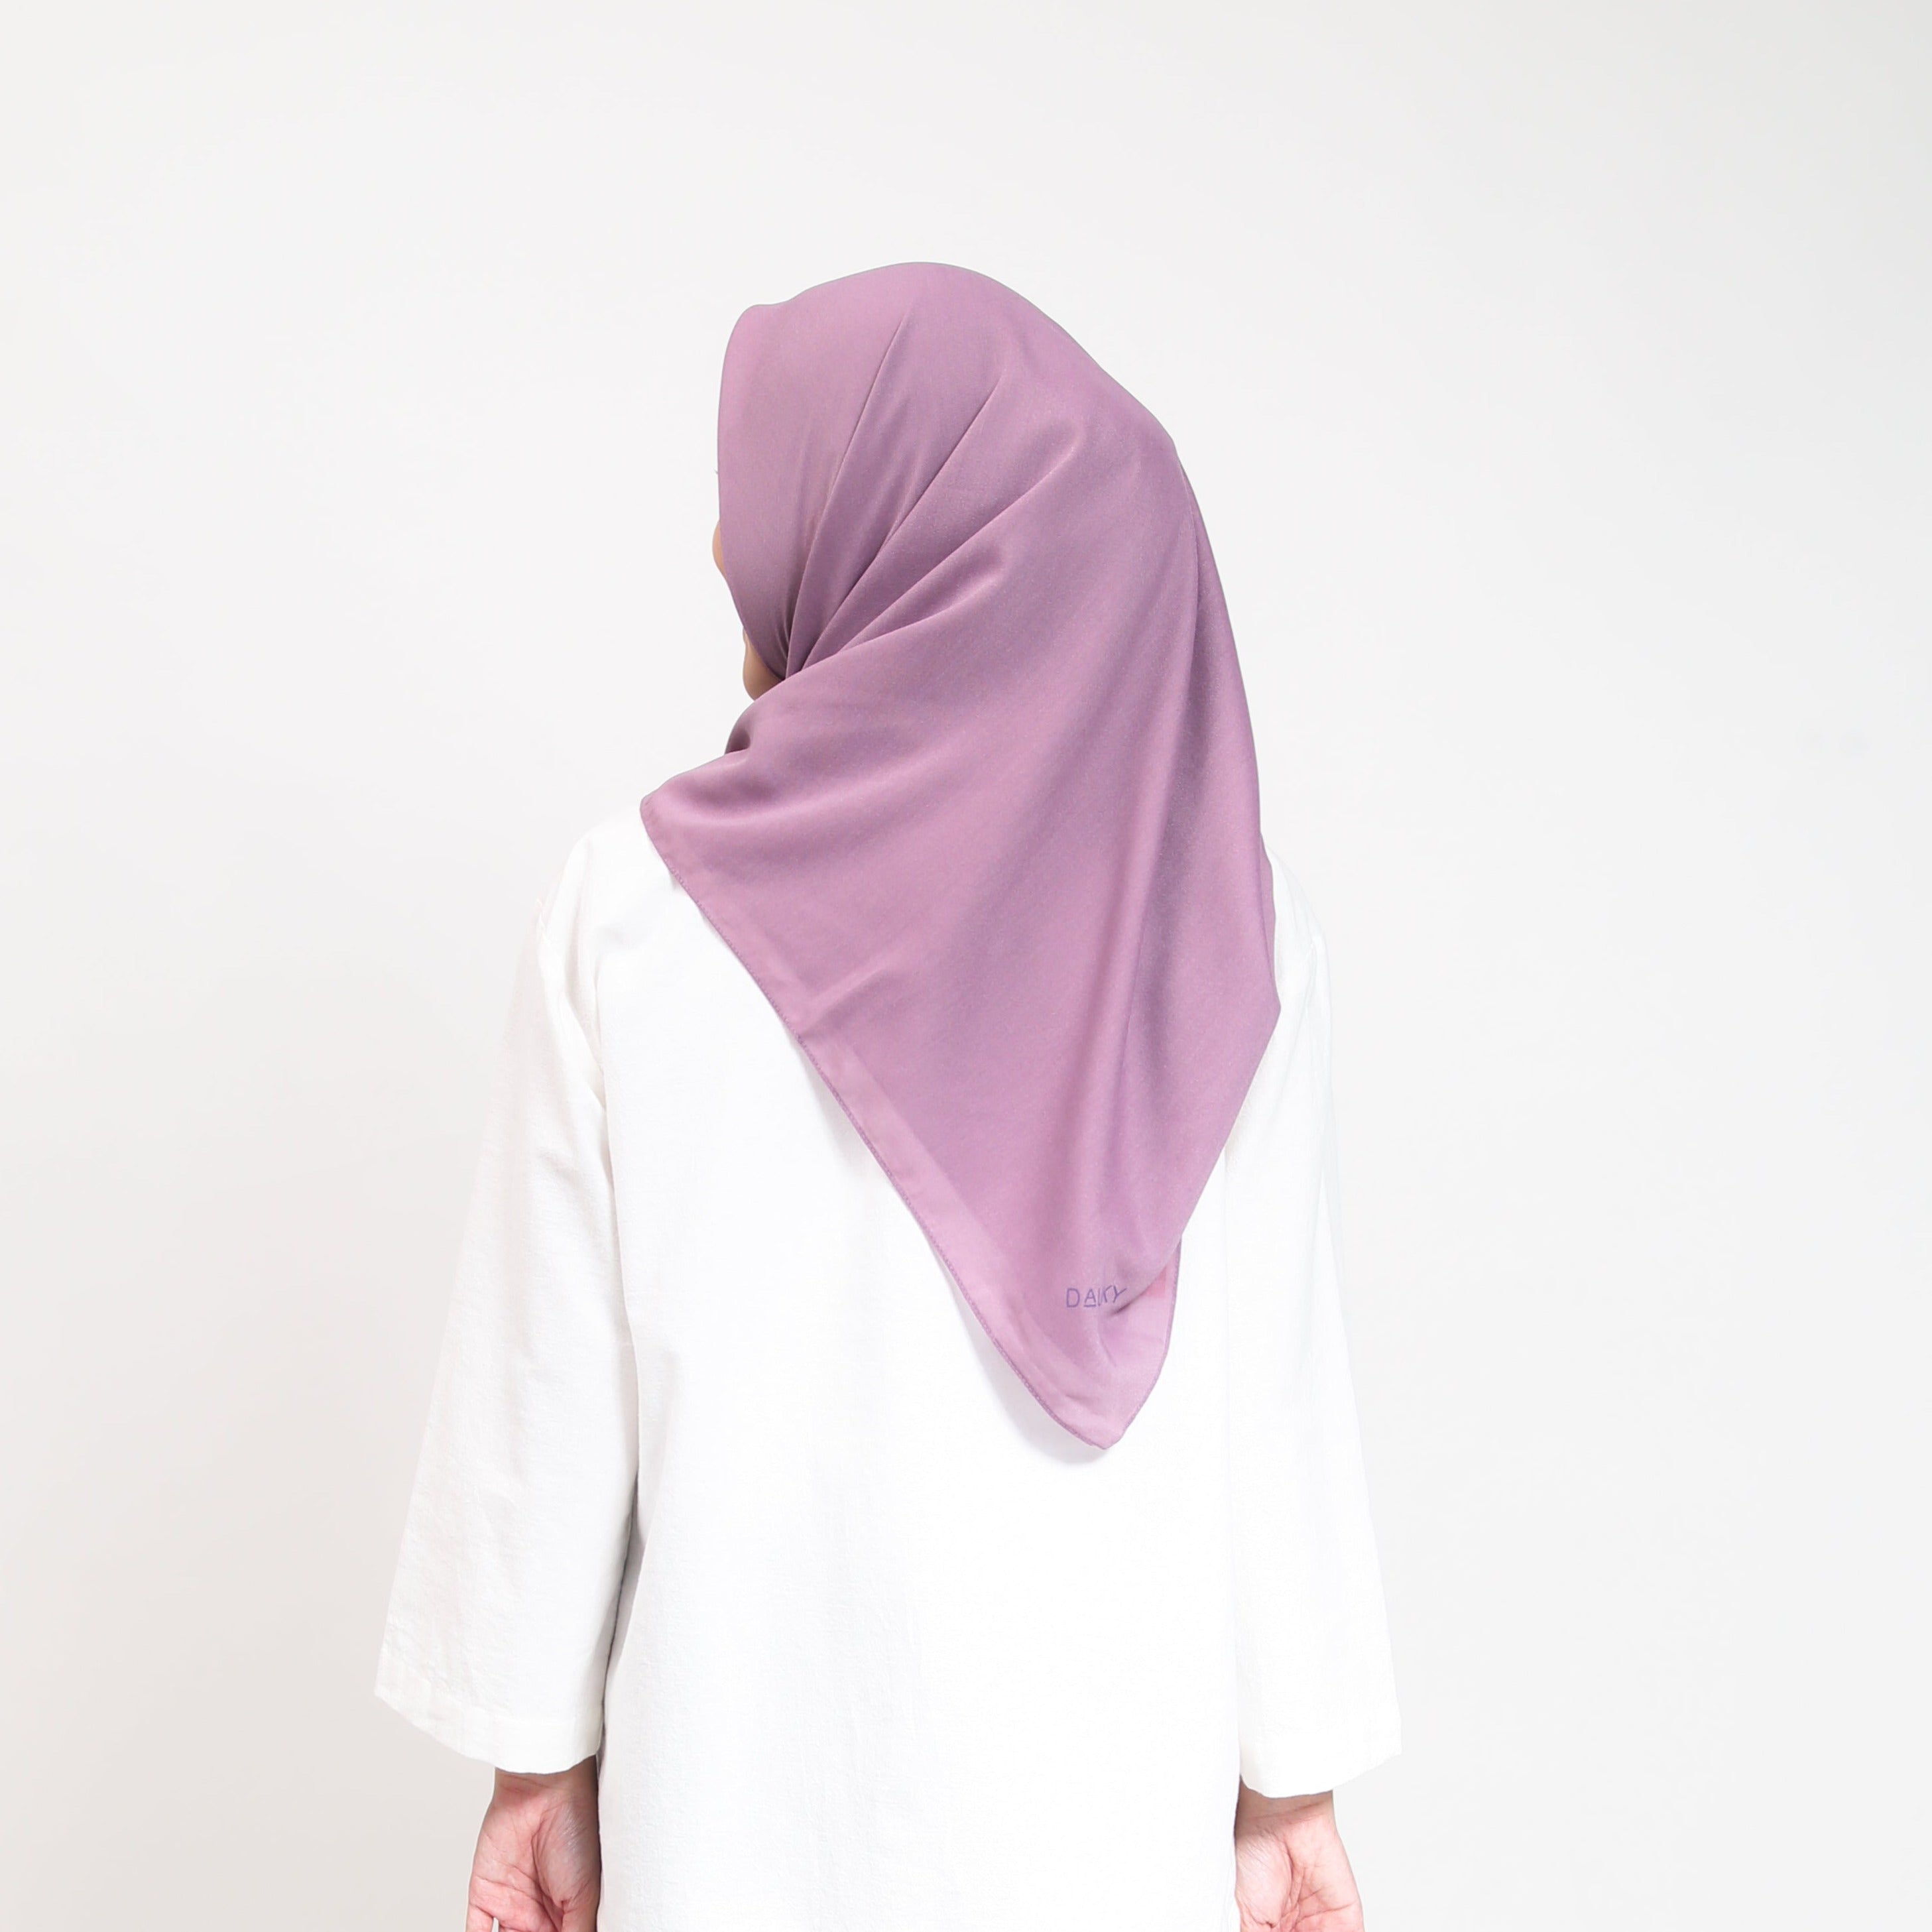 Dauky Jilbab Segi Empat Polos Voal Texture Plain Scarf  - Lavender